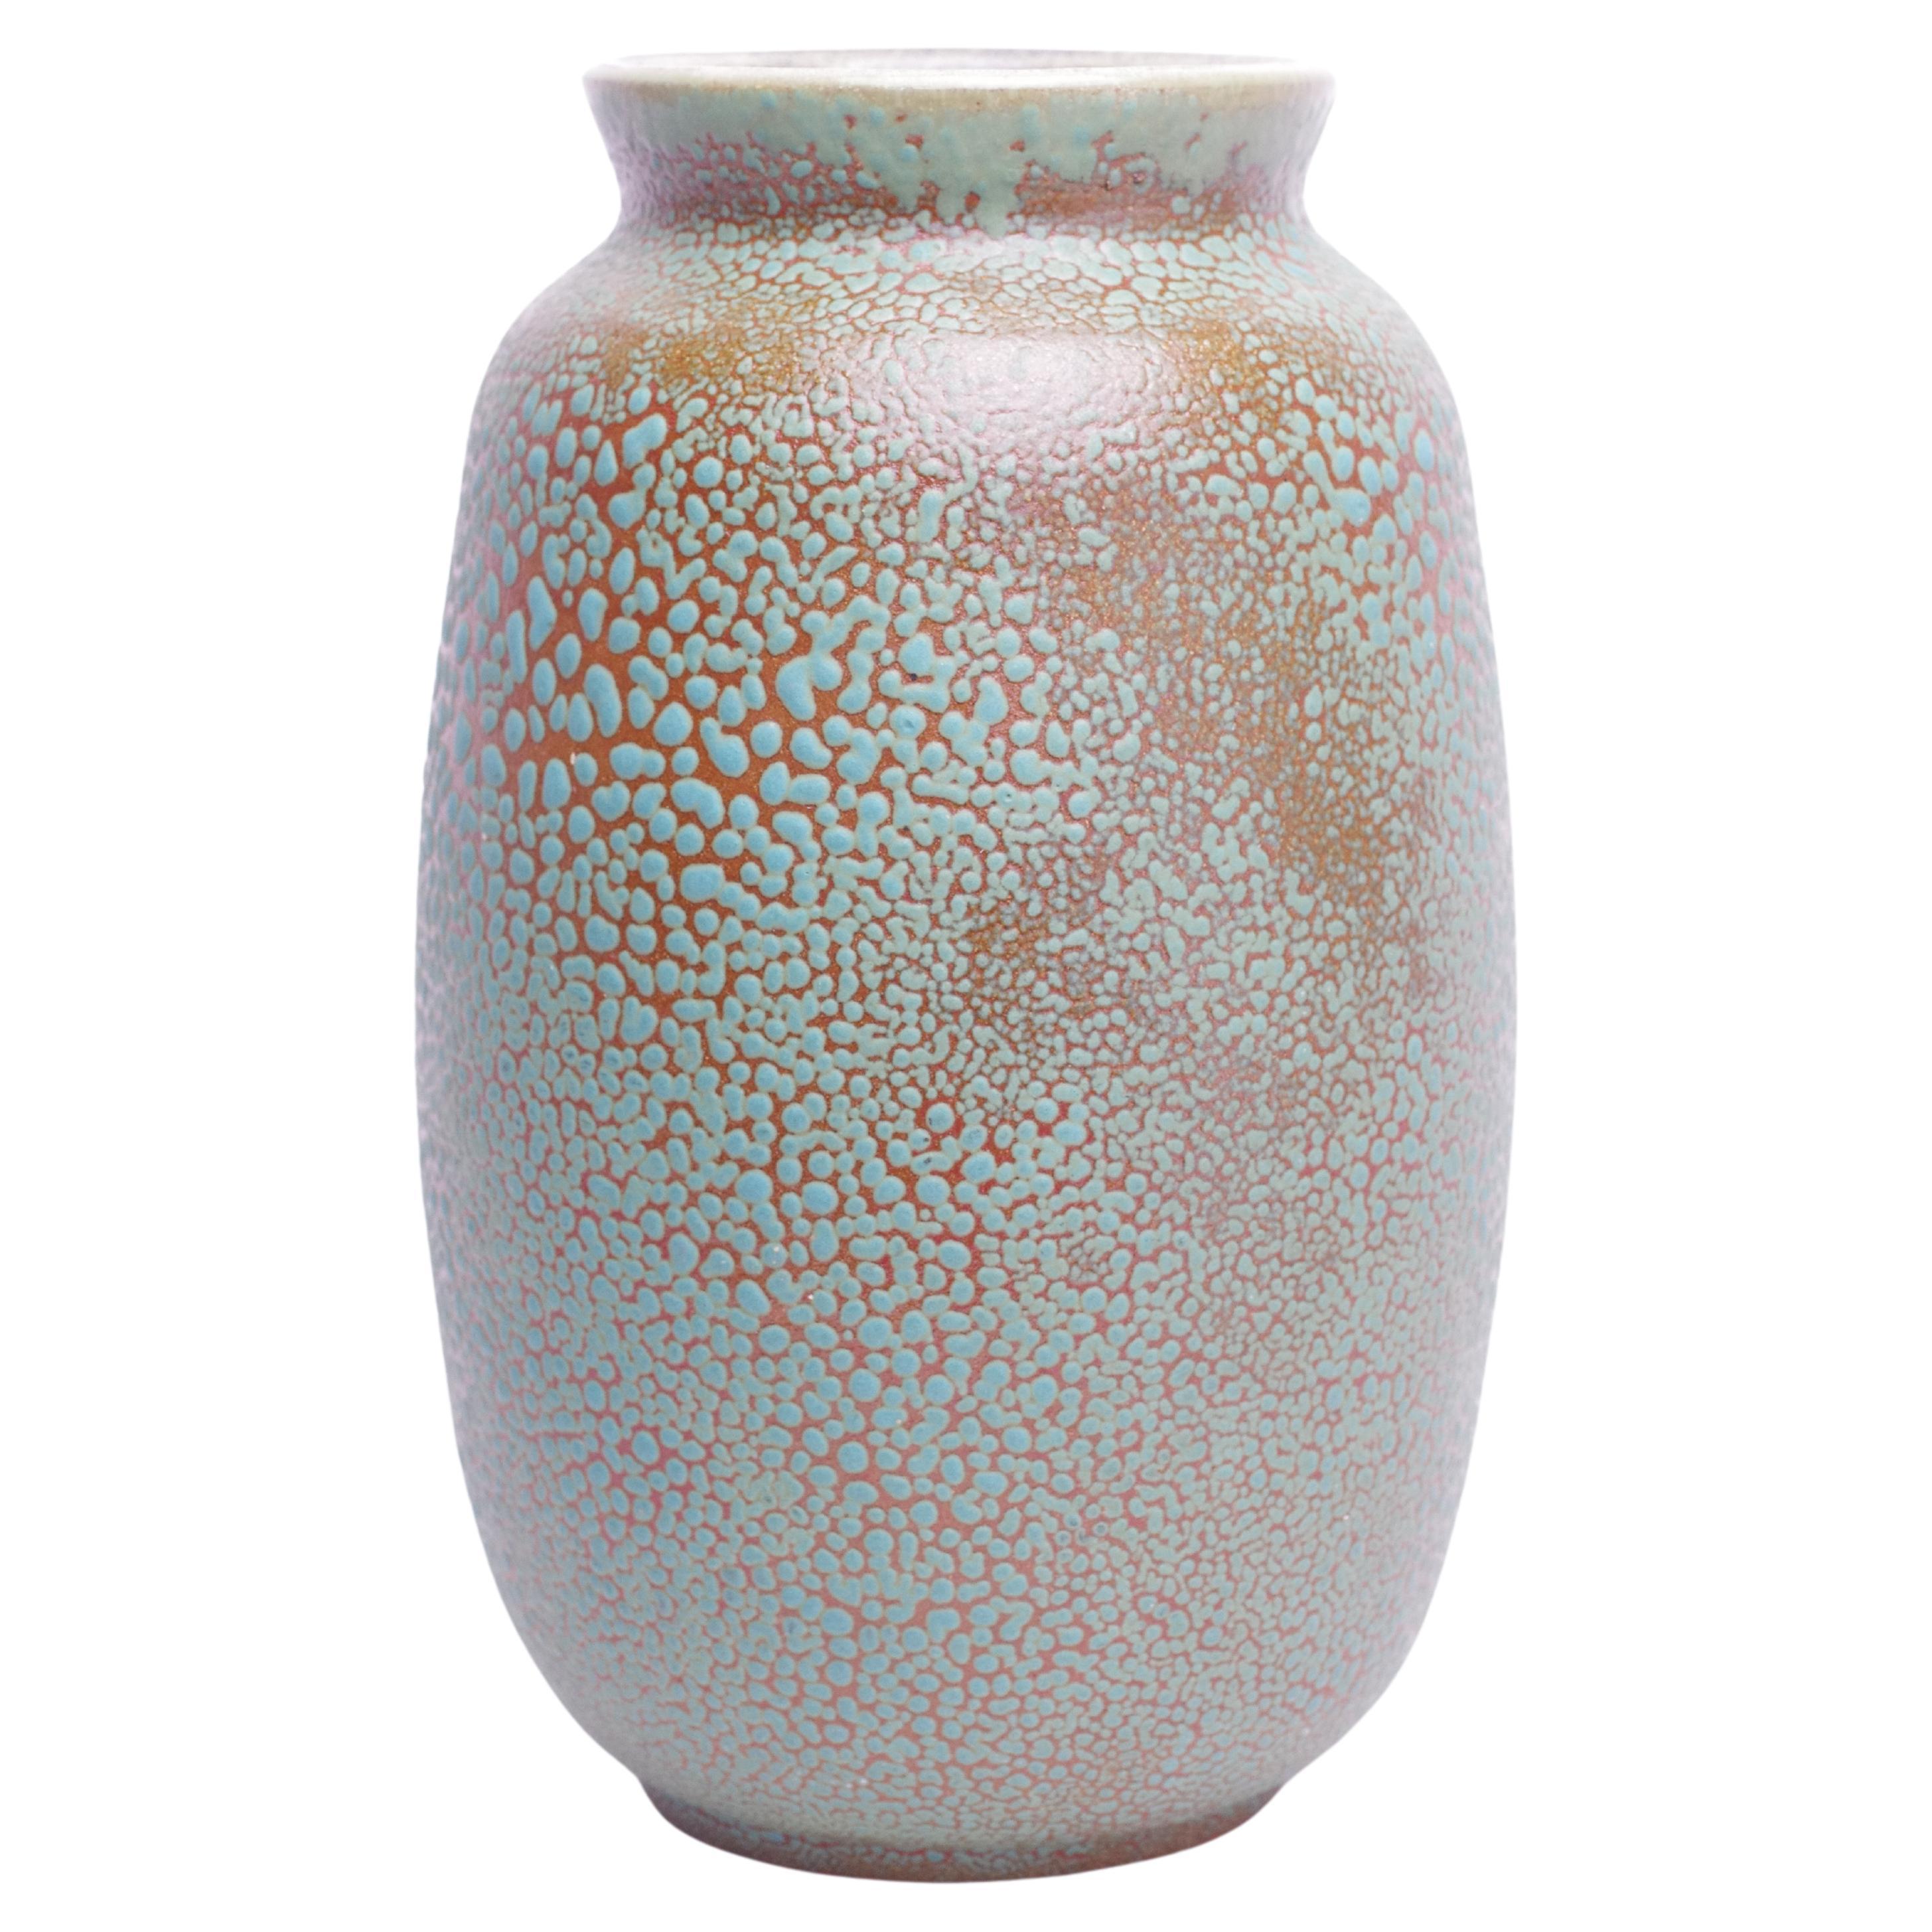 Grand vase Theo Genemans 